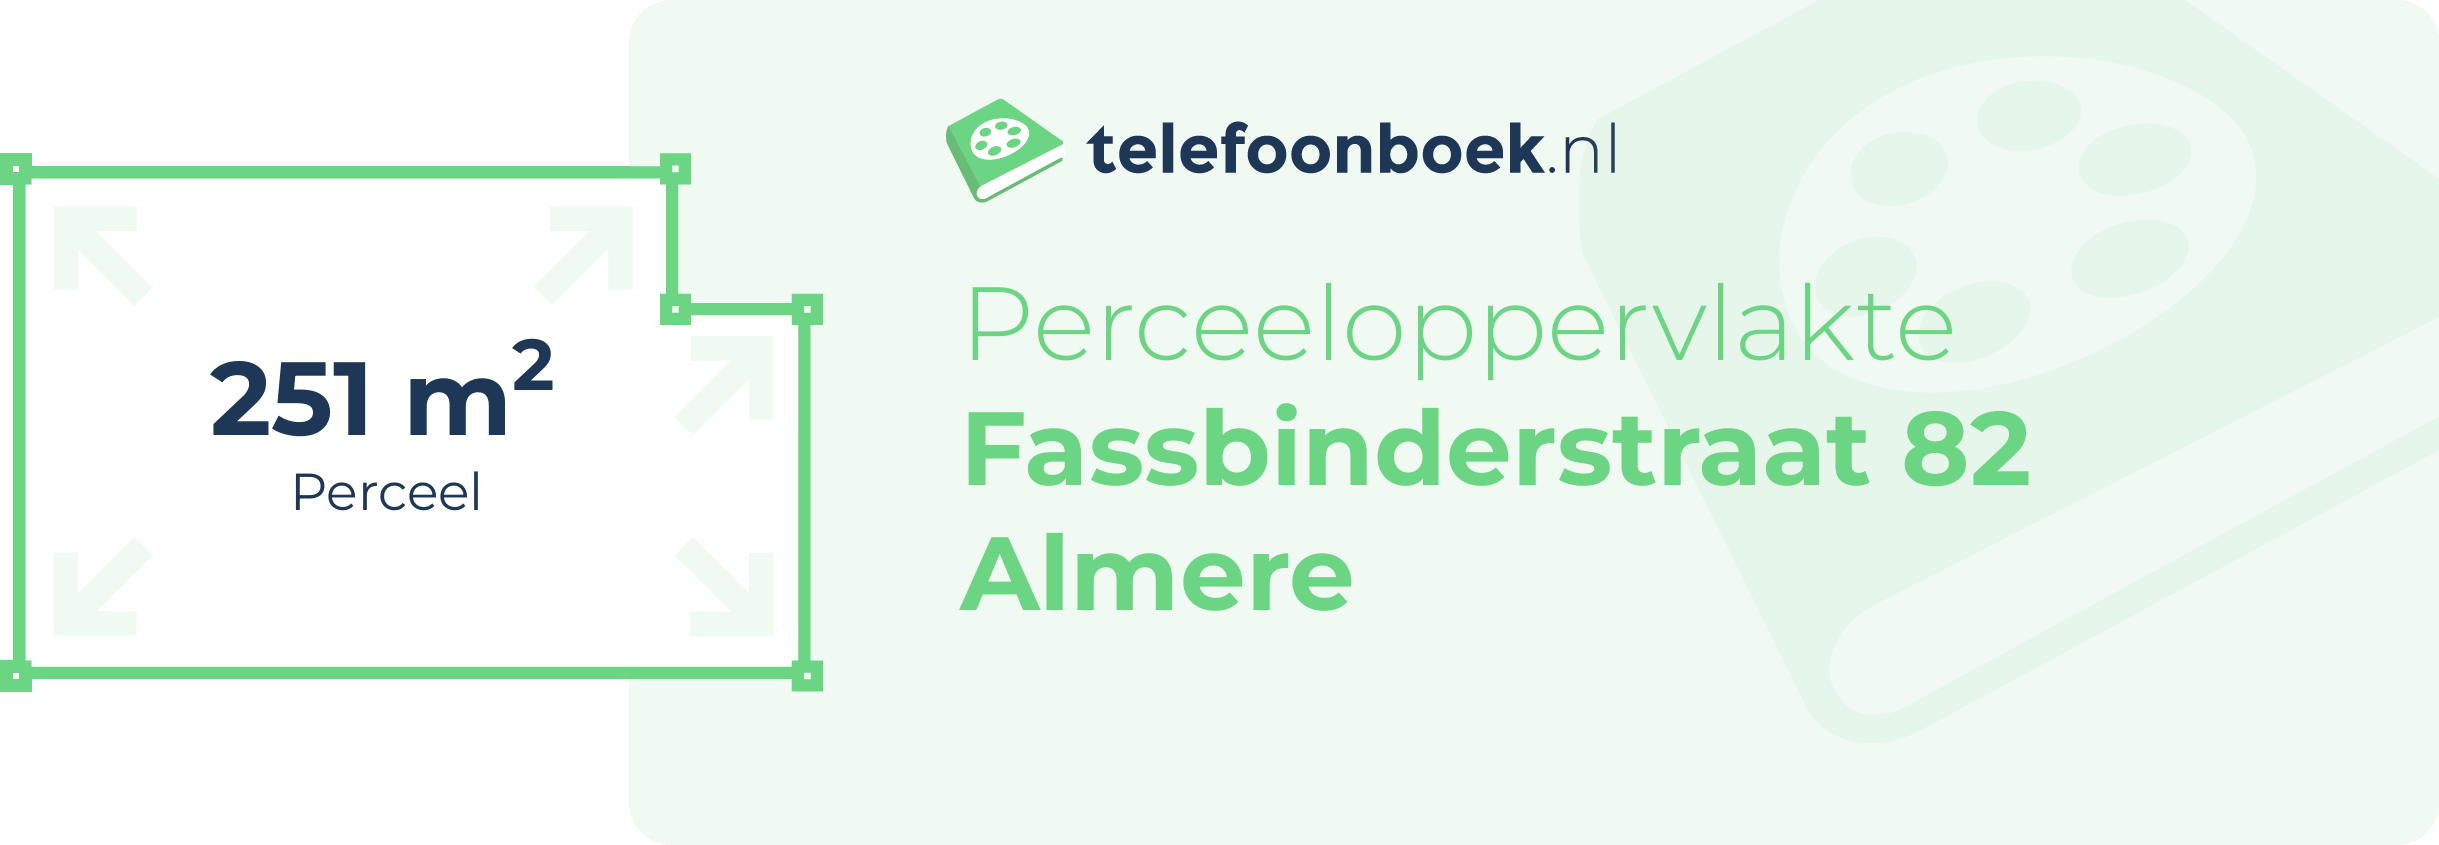 Perceeloppervlakte Fassbinderstraat 82 Almere